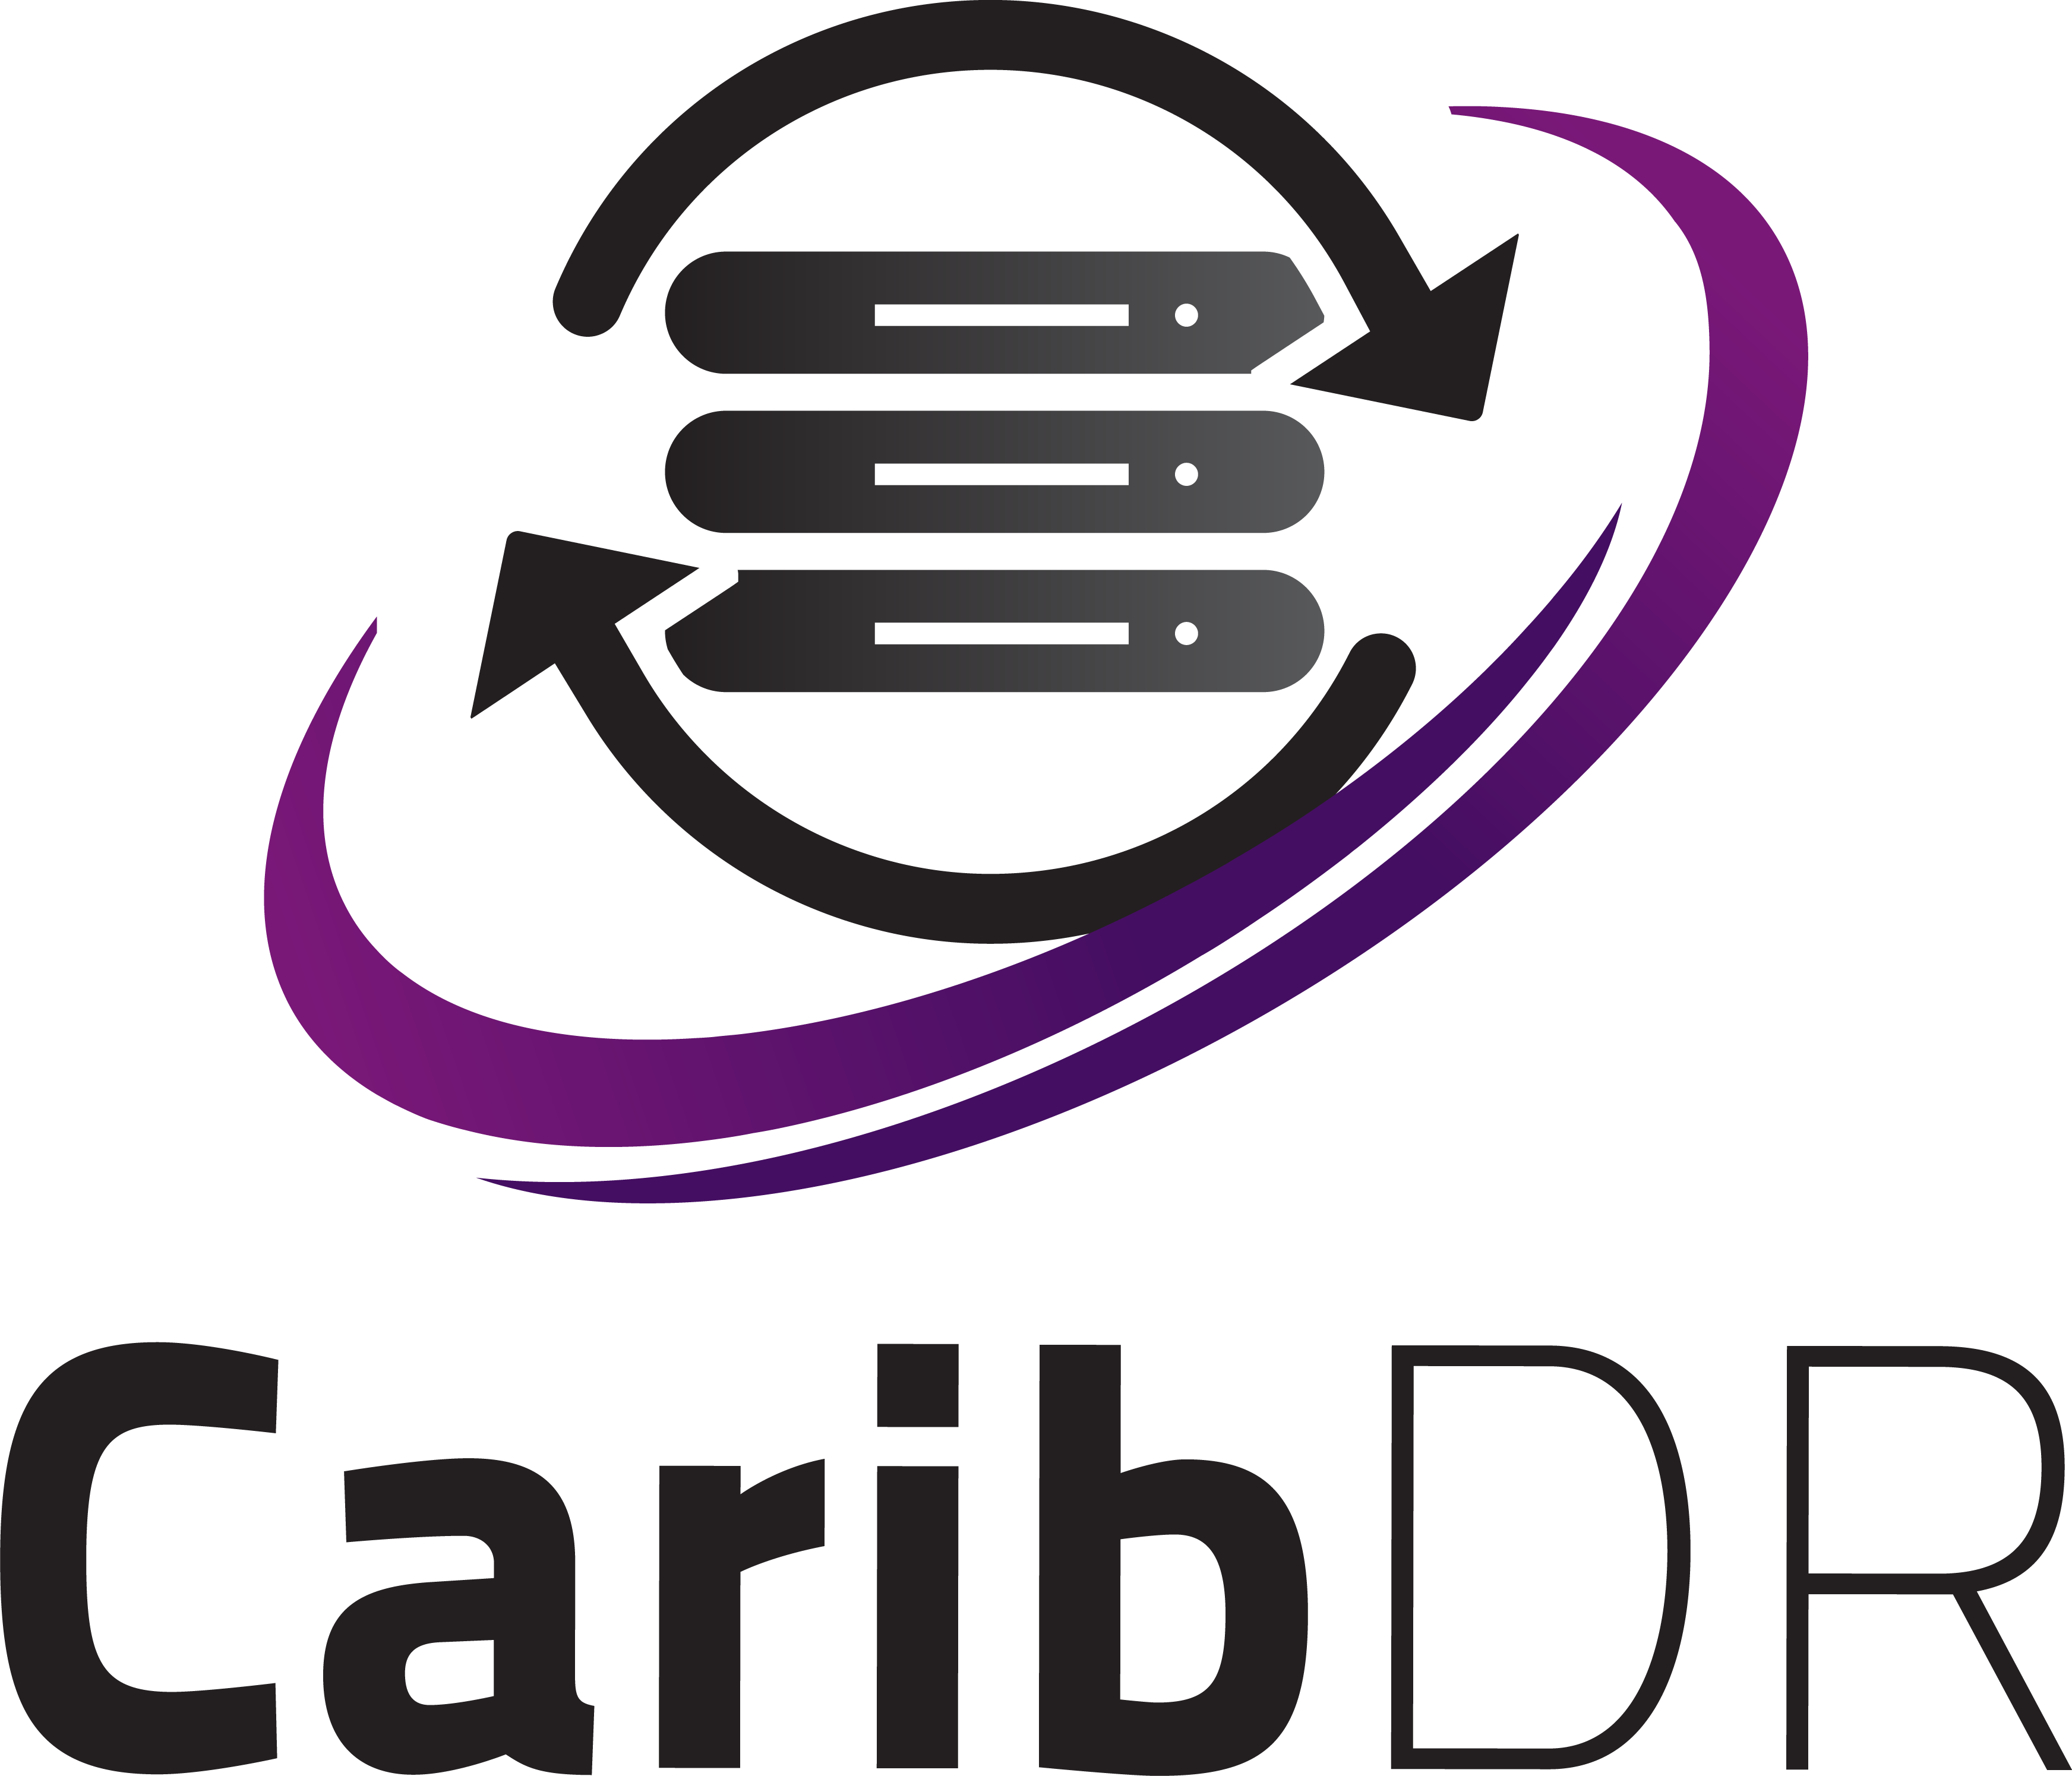 Carib-DR-vertical-version-full-color.png